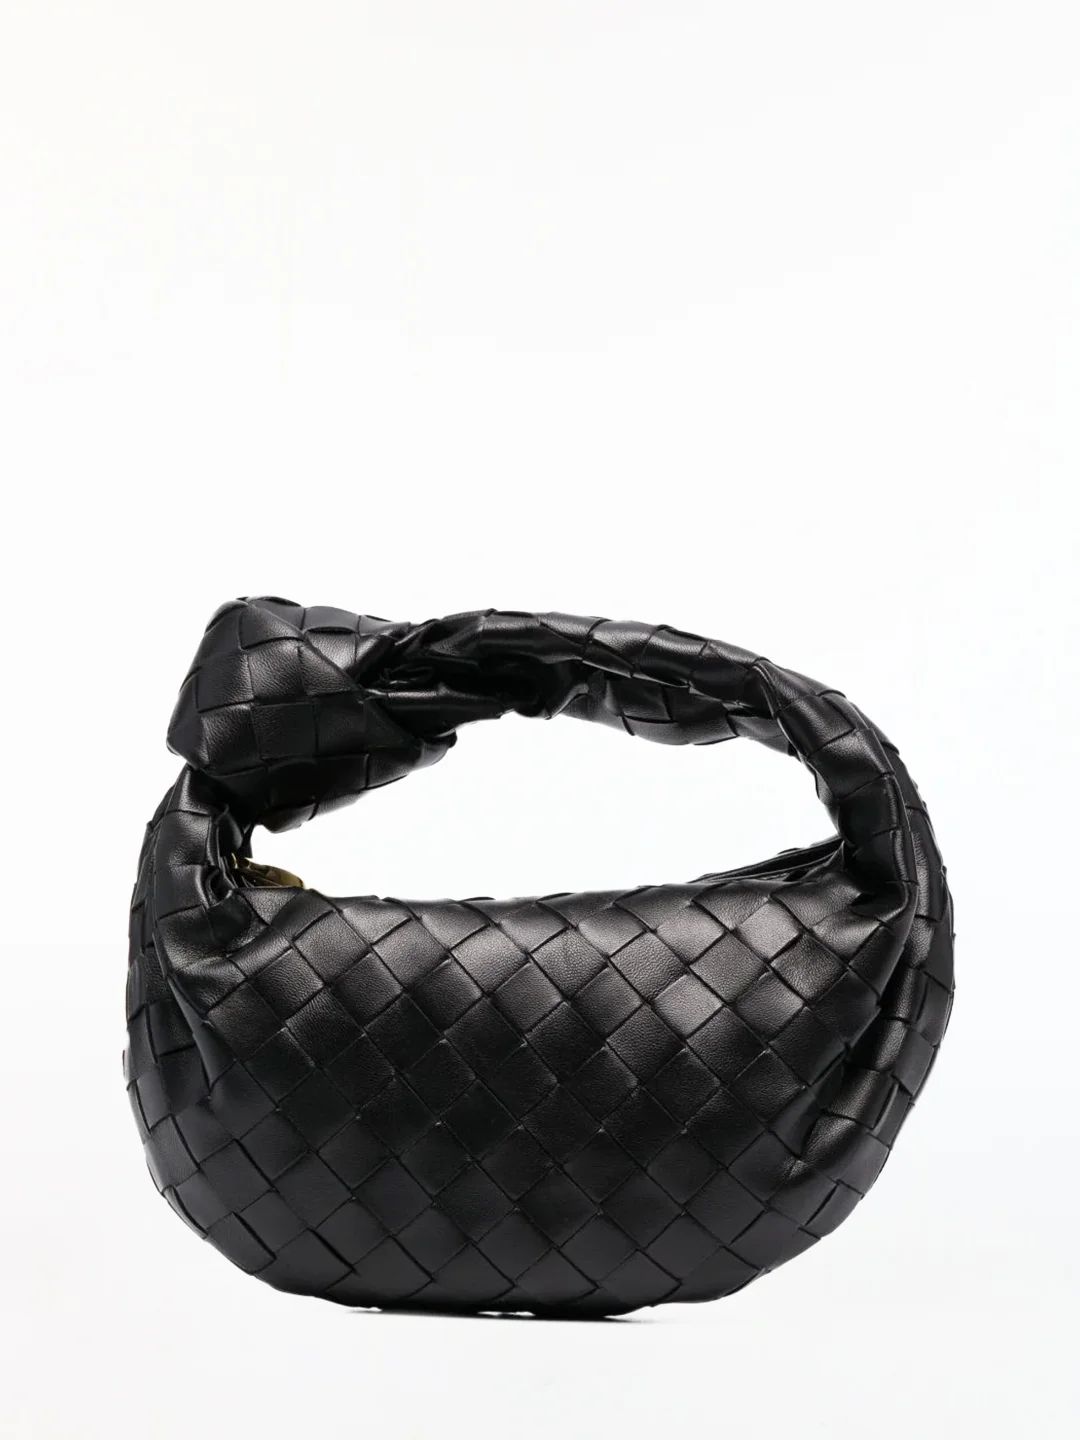 Bottega VenetaBottega Veneta The Mini Jodie Bag$2,076.99Size GuideAdd to WishlistPlease select a ... | Cettire Global